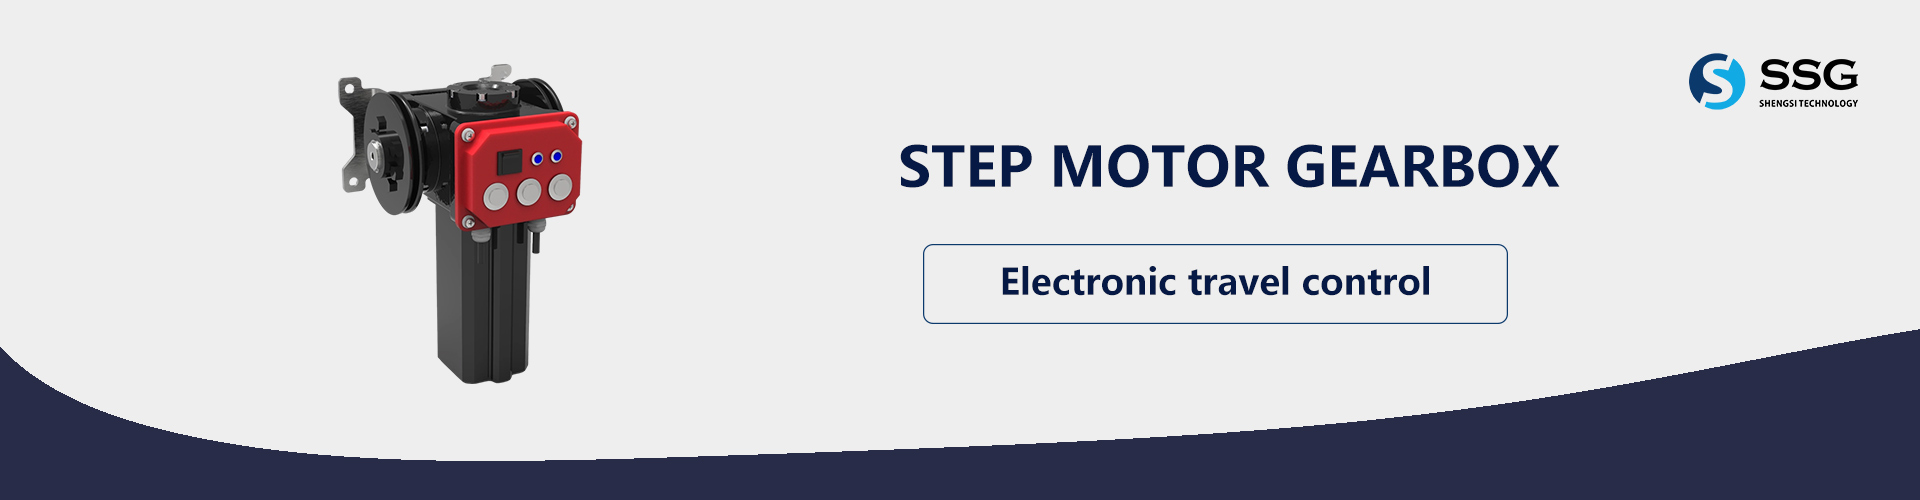 STEP-MOTOR-GEARBOX-banner